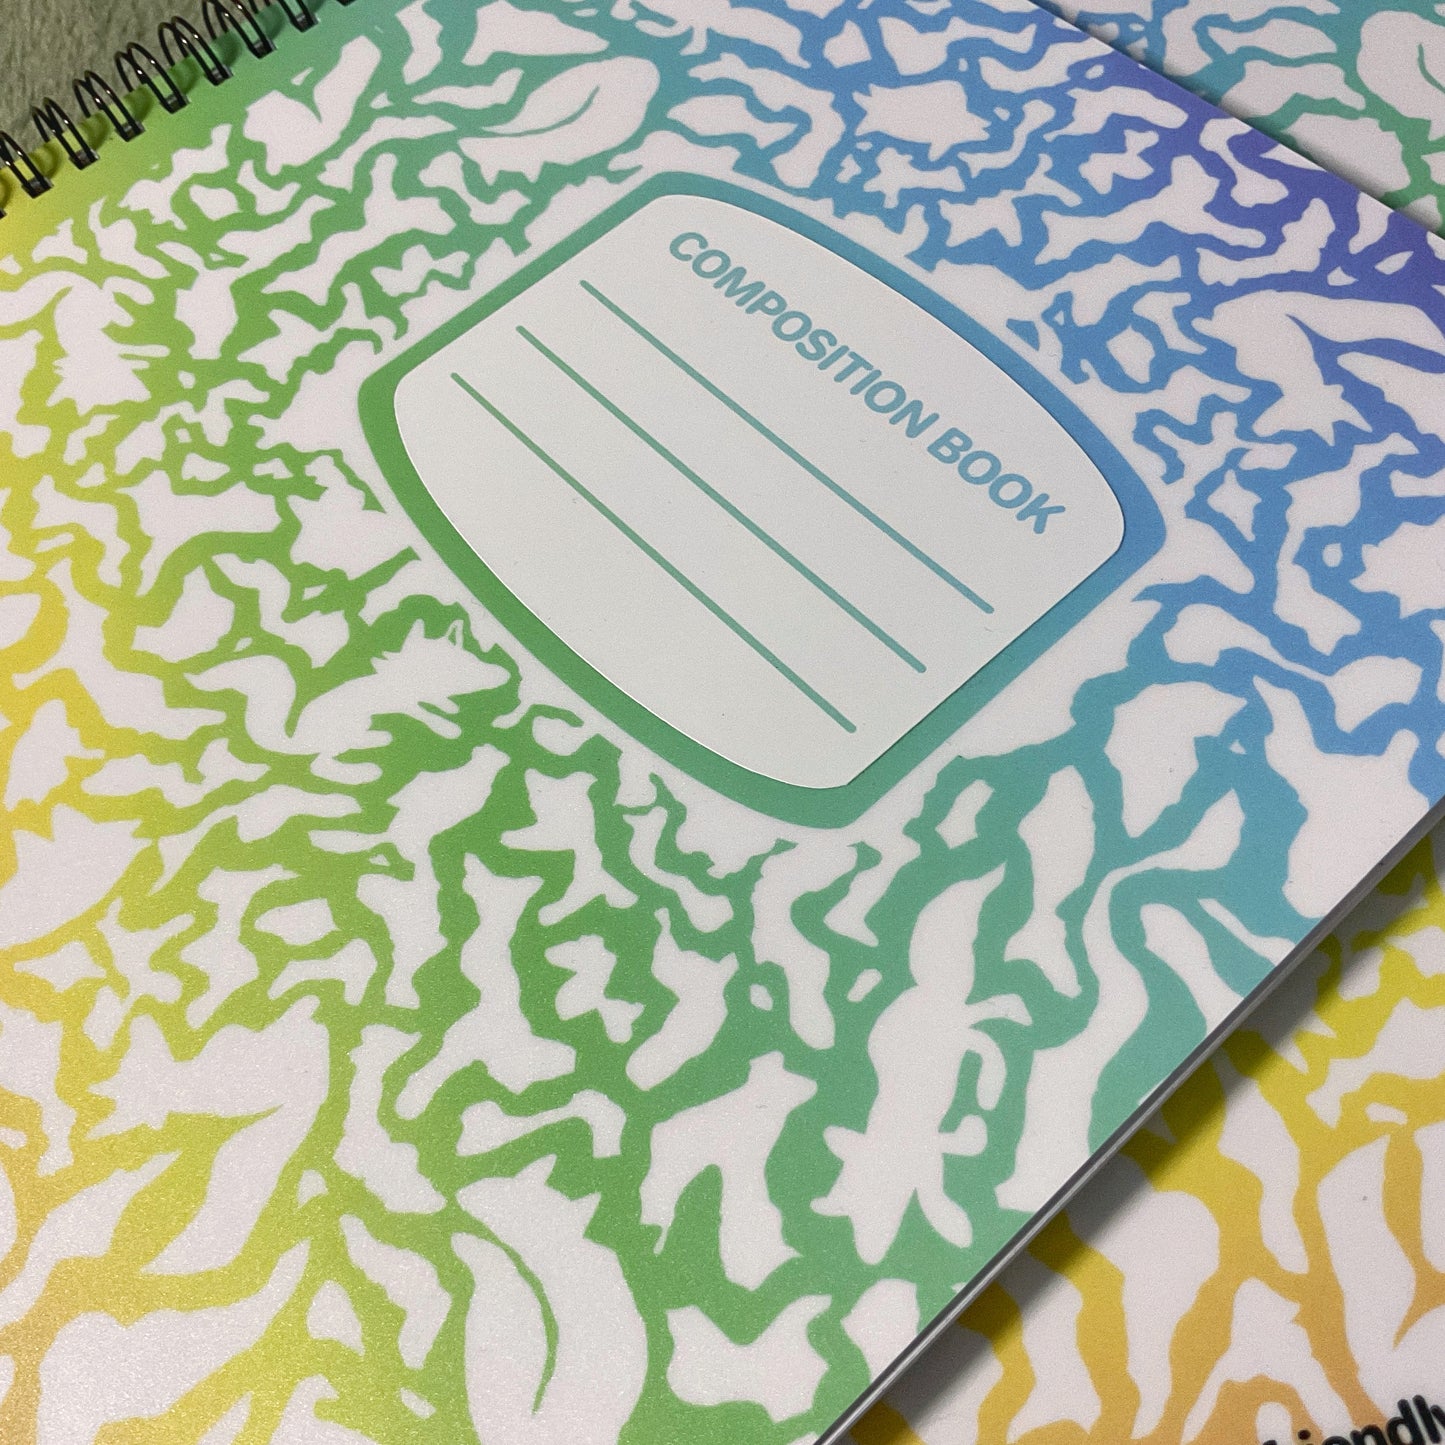 Rainbow Composition Book notebook